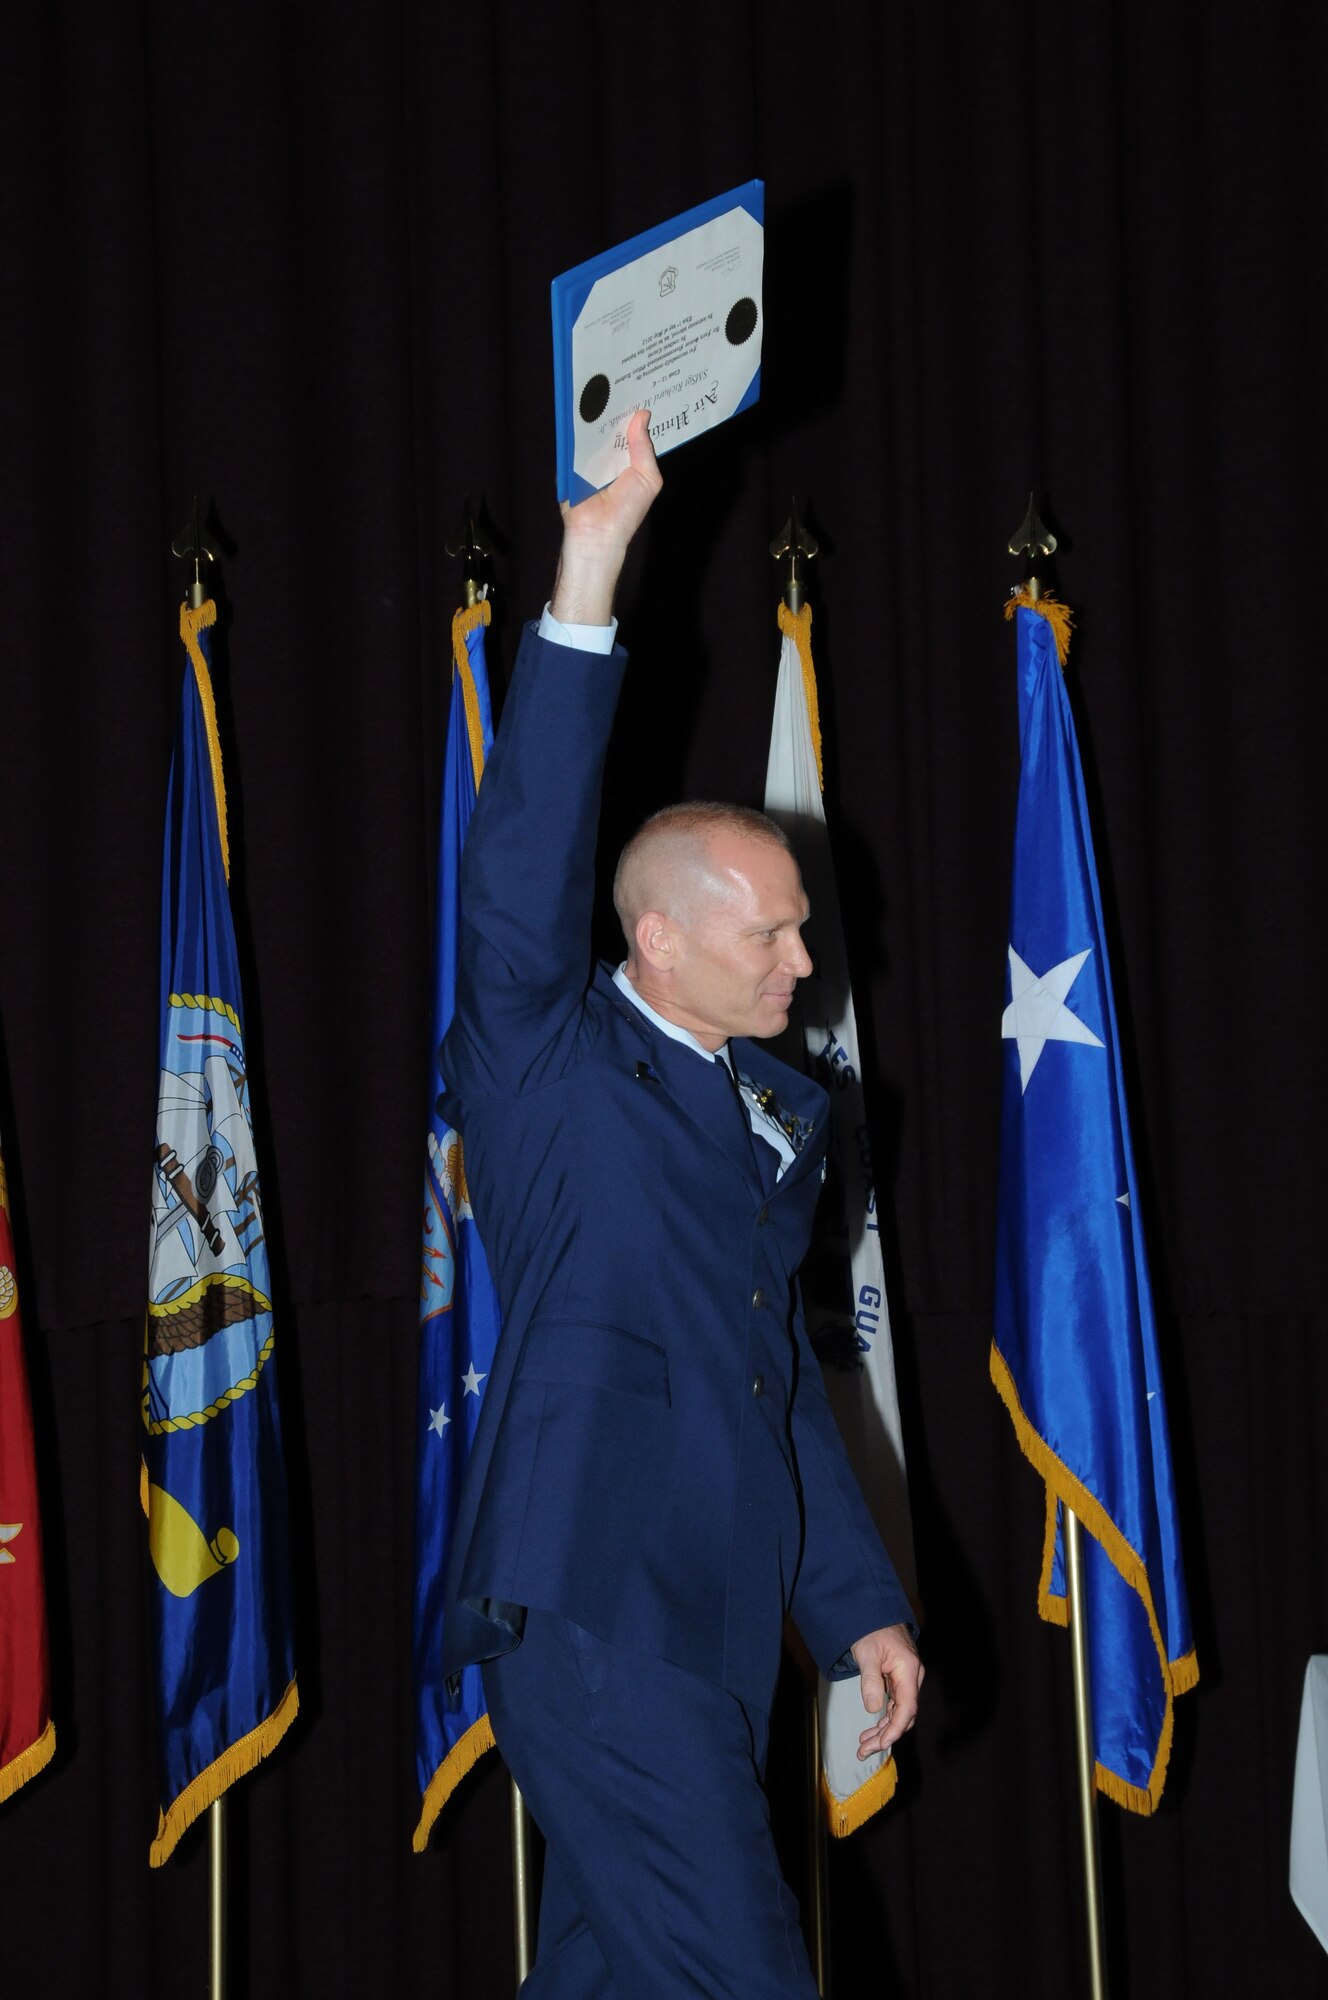 Senior Master Sgt. Richard Reynolds Jr., the class president, holds his degree aloft in celebration at the Air Force Senior NCO Academy graduation Tuesday.